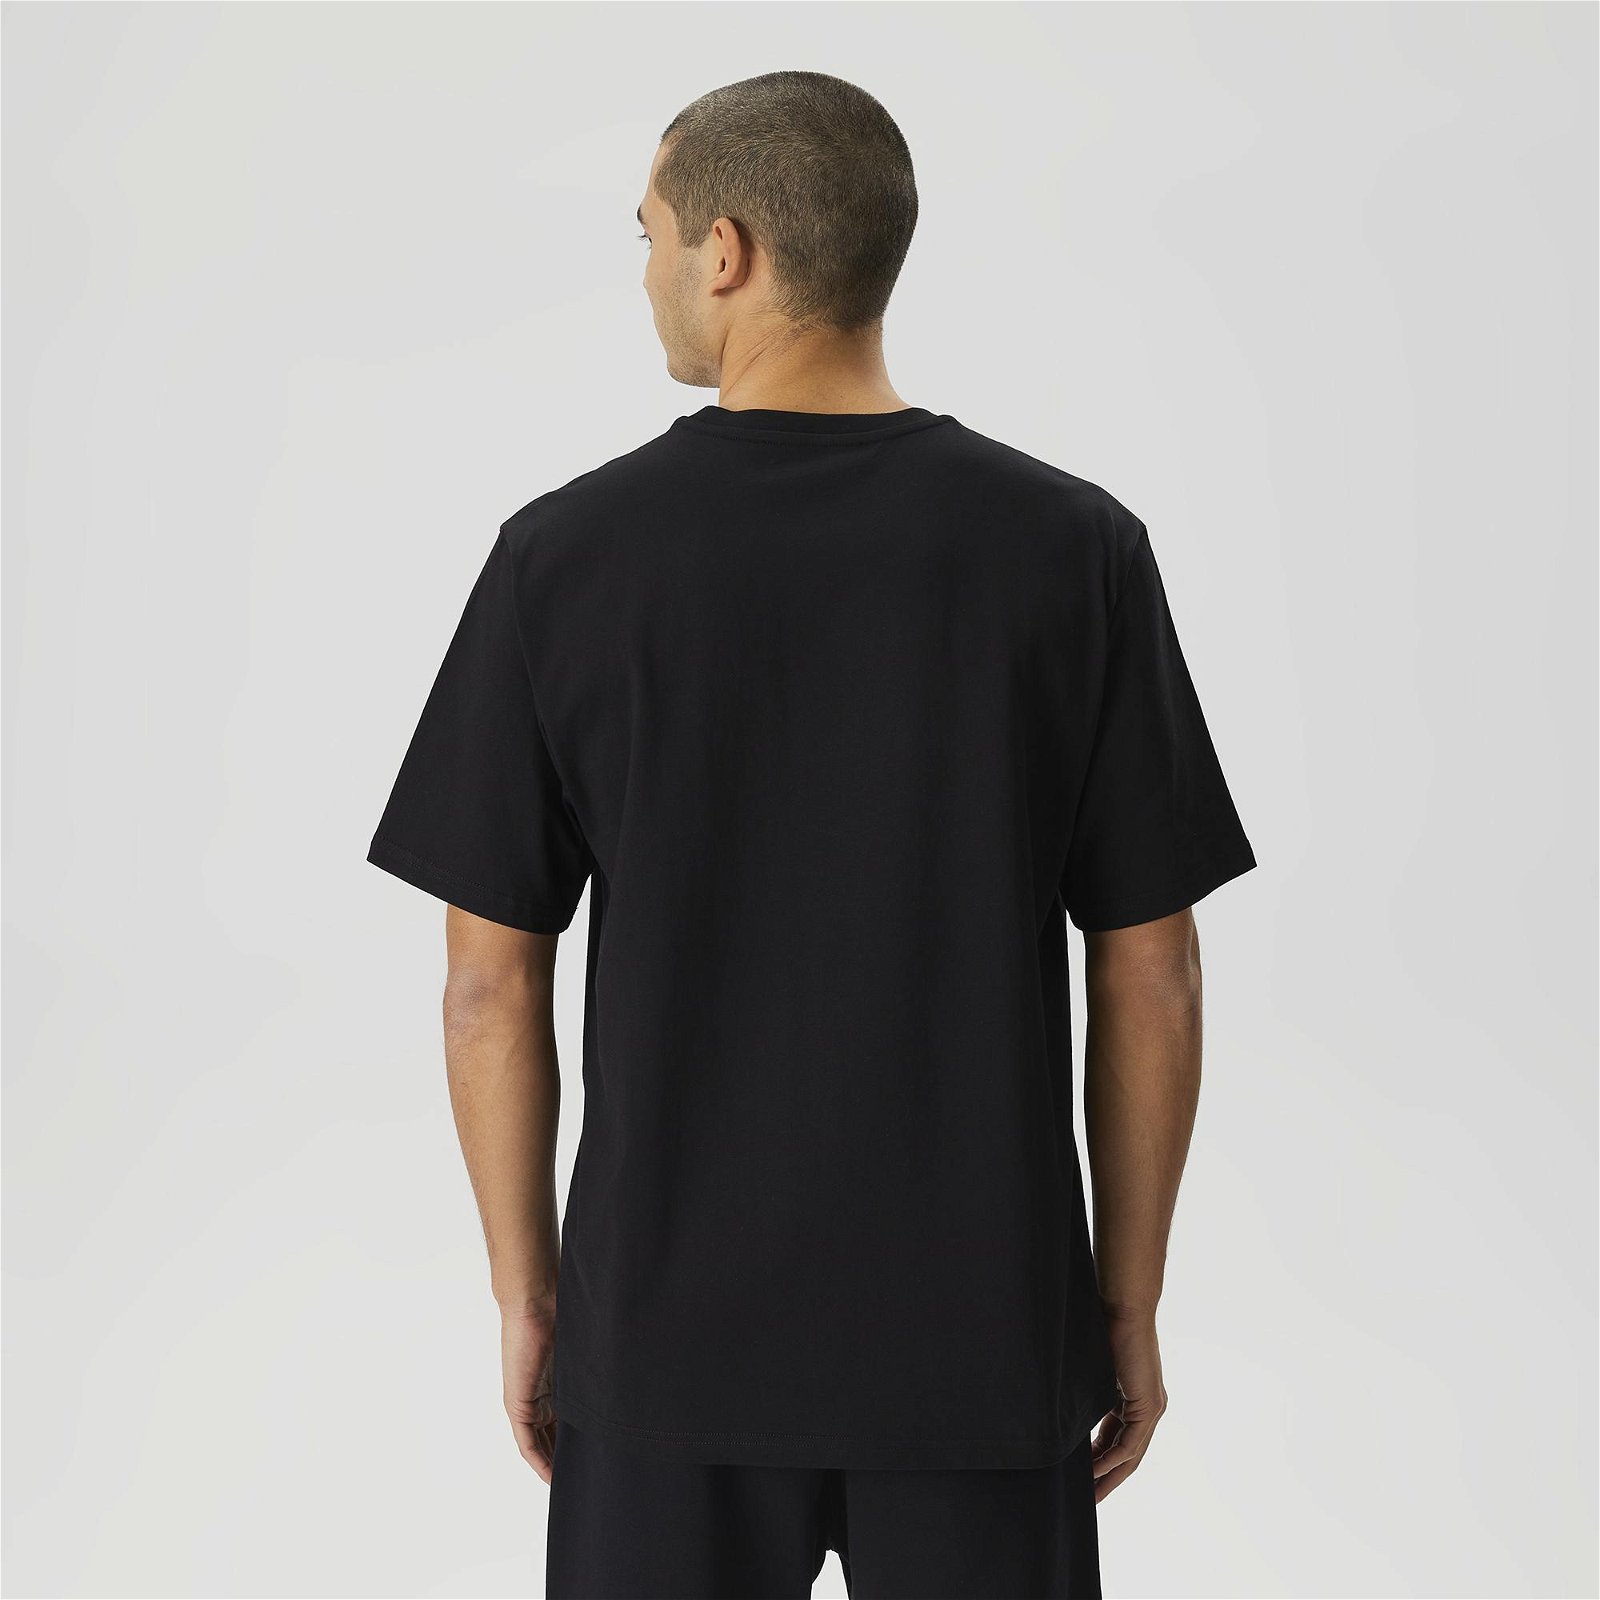 Les Benjamins 404 Unisex Siyah T-Shirt